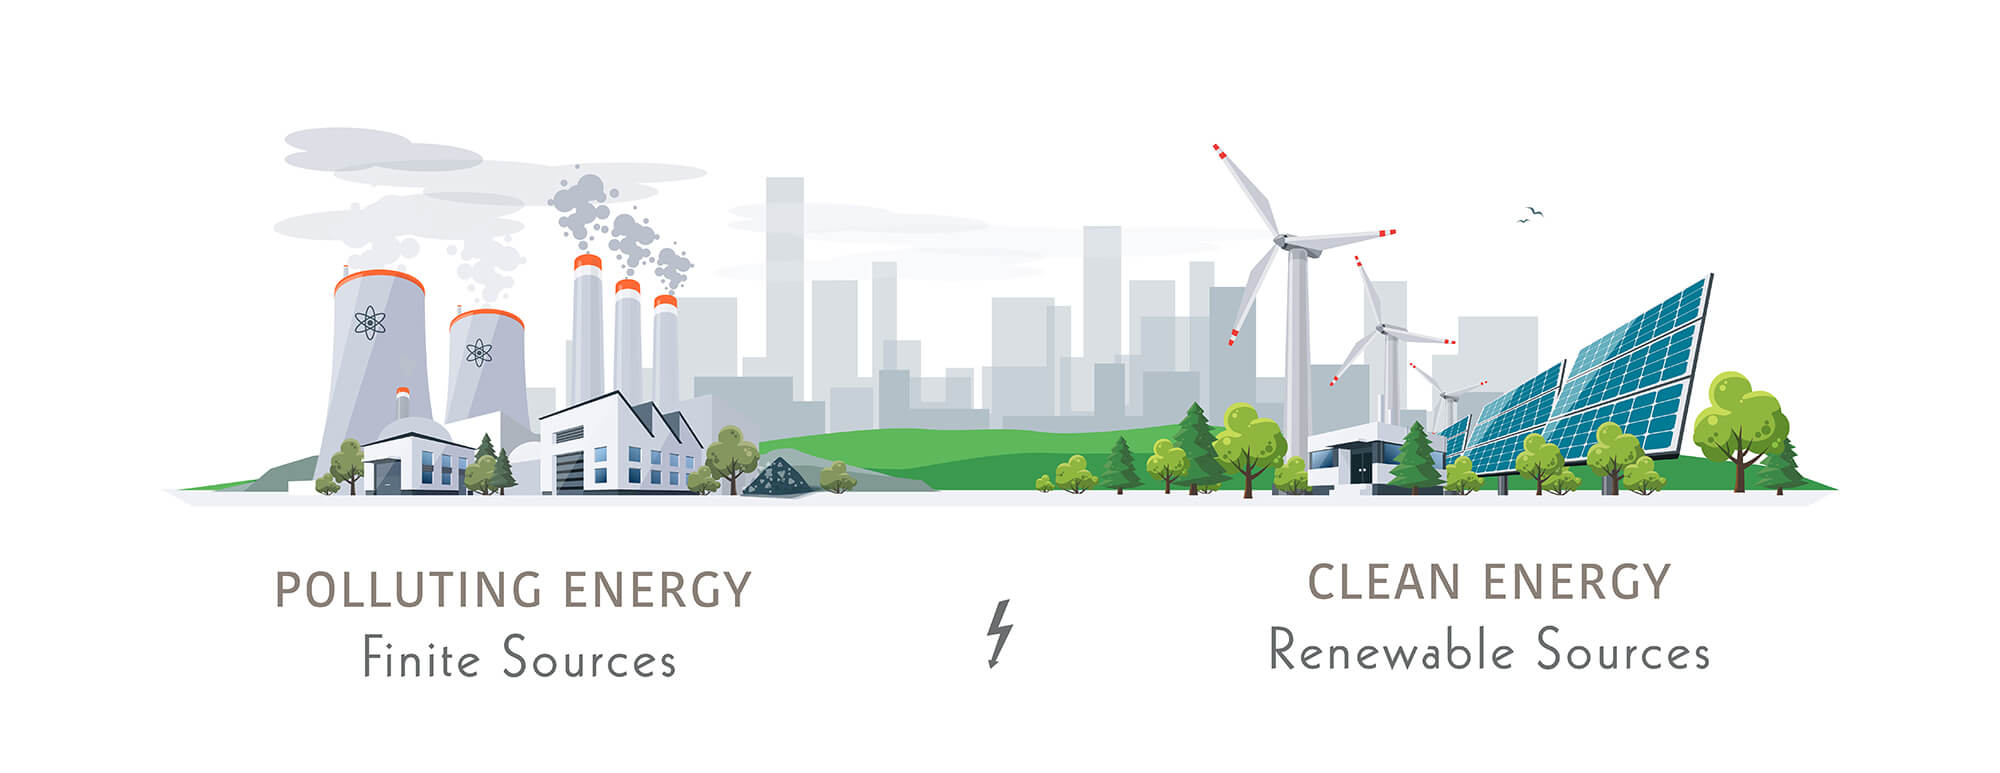 Illustration of finite versus renewable sources of energy